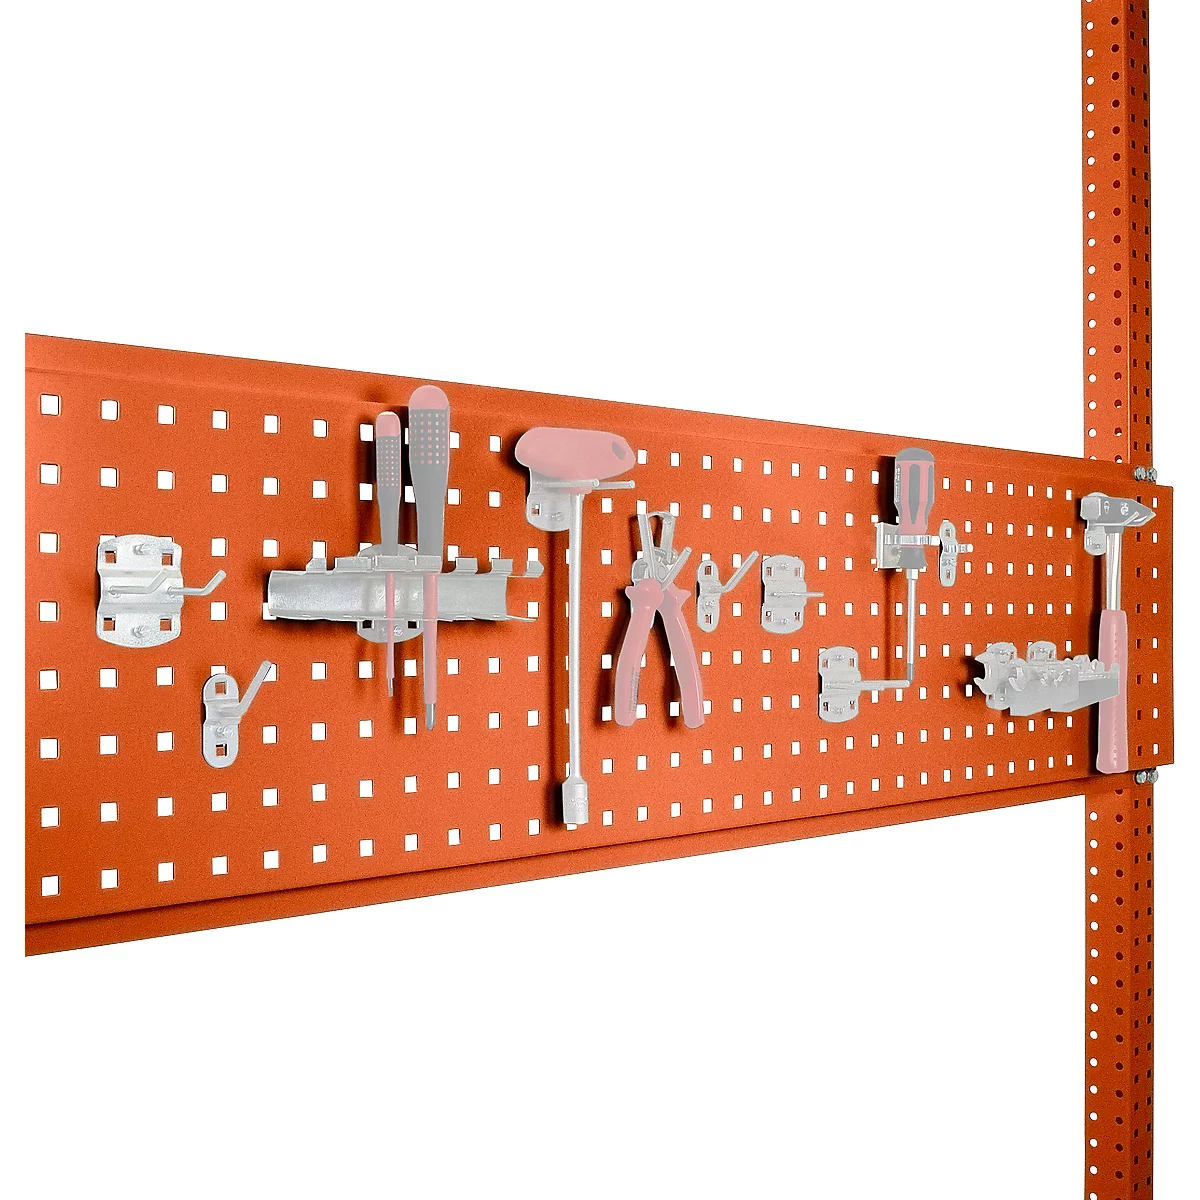 Placa perforada para herramientas, para anchura de mesa 1750 mm, para serie Universal/Profi, rojo anaranjado RAL 2001